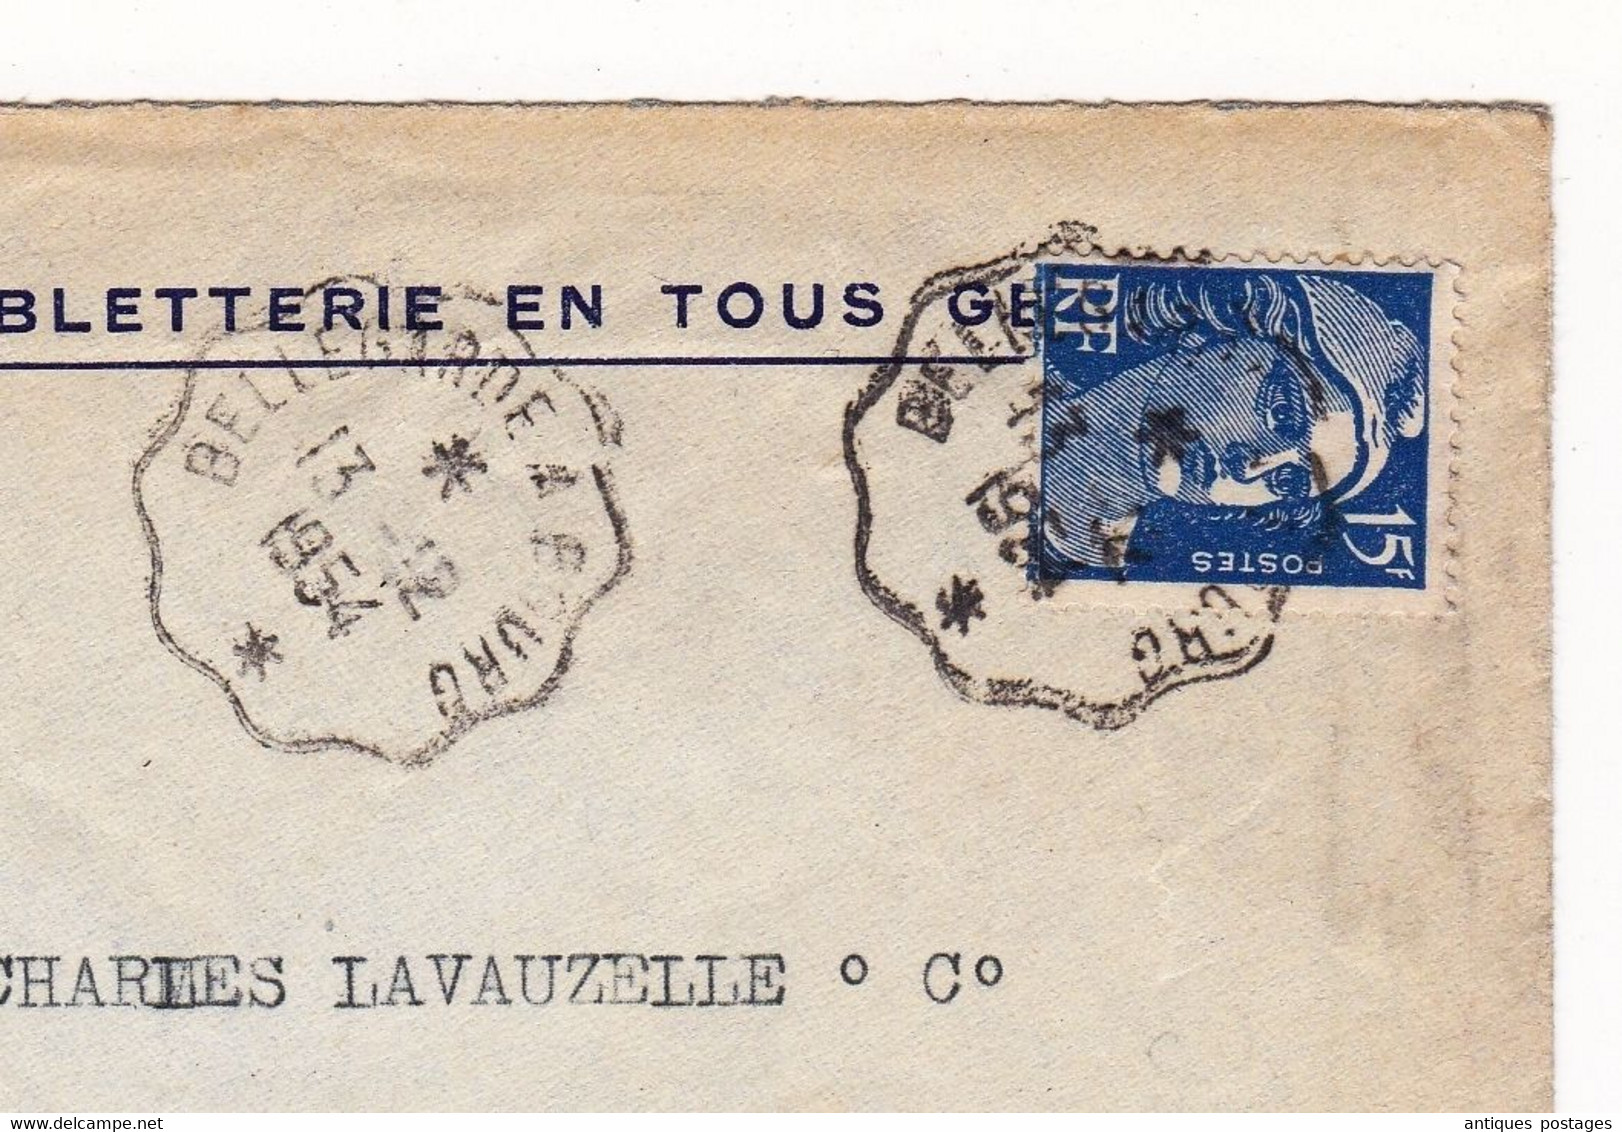 Les Neyrolles Ain 1954 Henri Dupuis Tournerie Tabletterie Cachet Convoyeur Bellegarde à Bourg En Bresse Mariane Gandon - 1945-54 Marianna Di Gandon